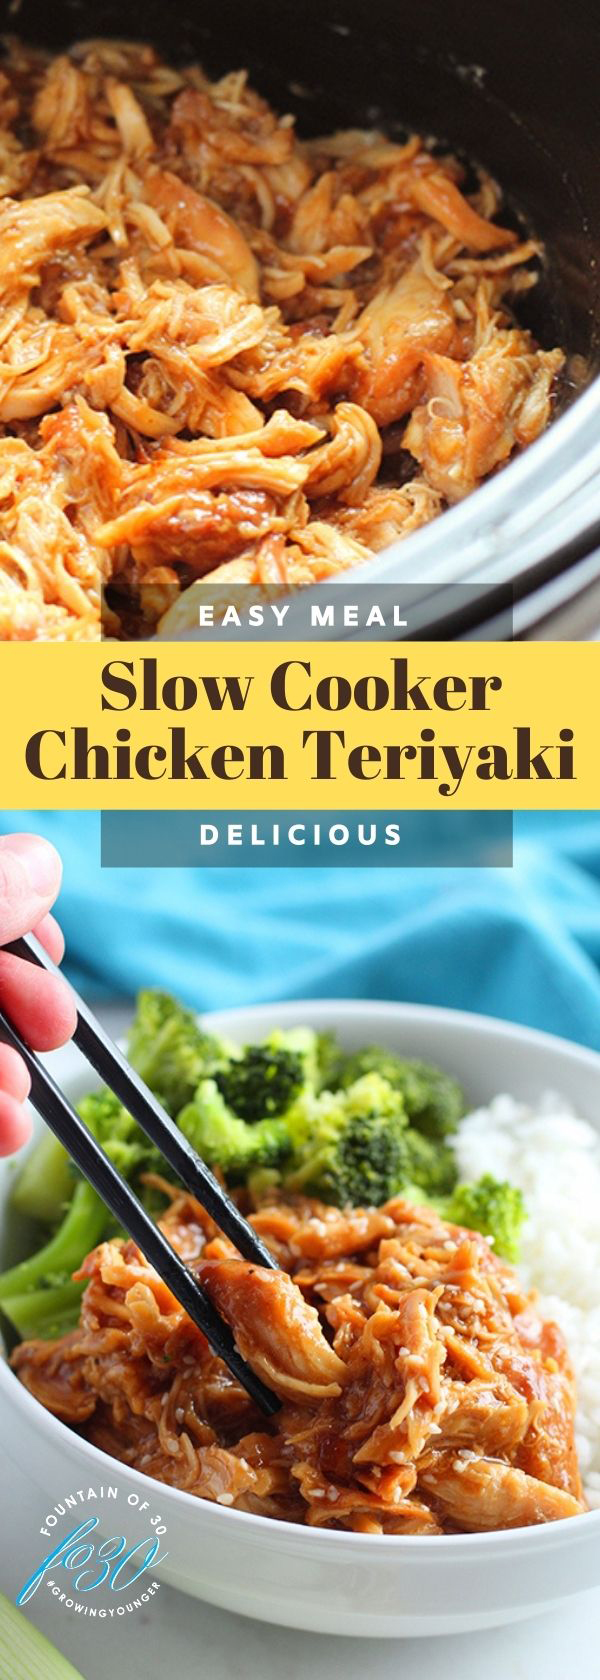 easy slow cooker chicken teriyaki fountainof30